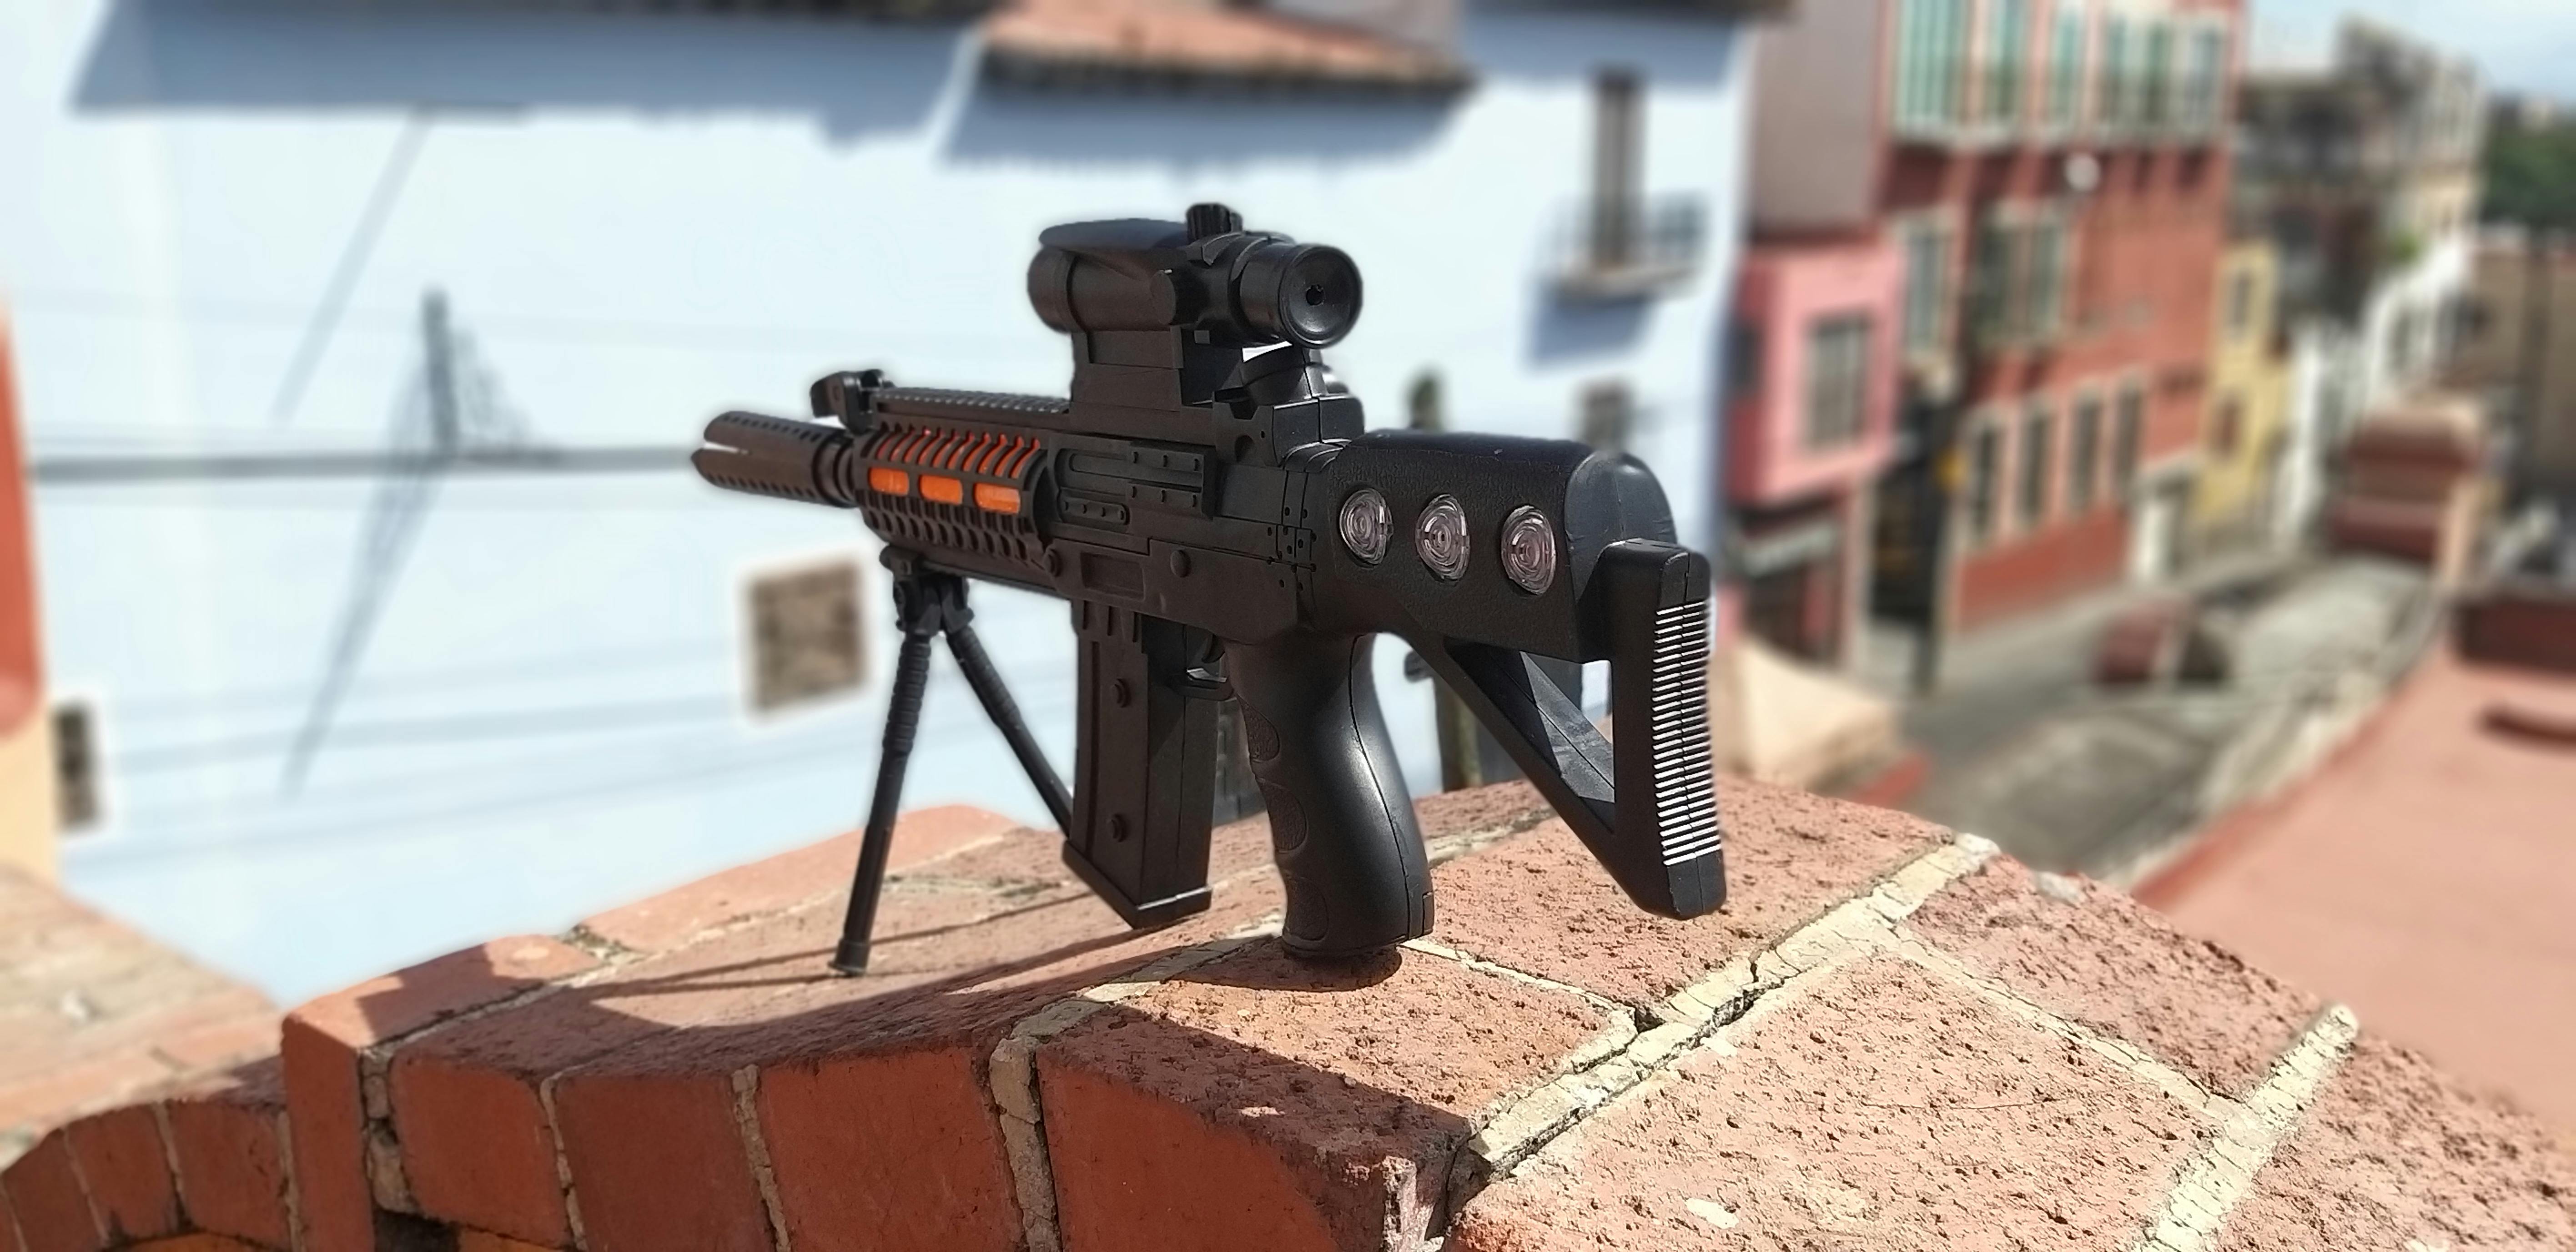 Free stock photo of gun, sniper, toy gun